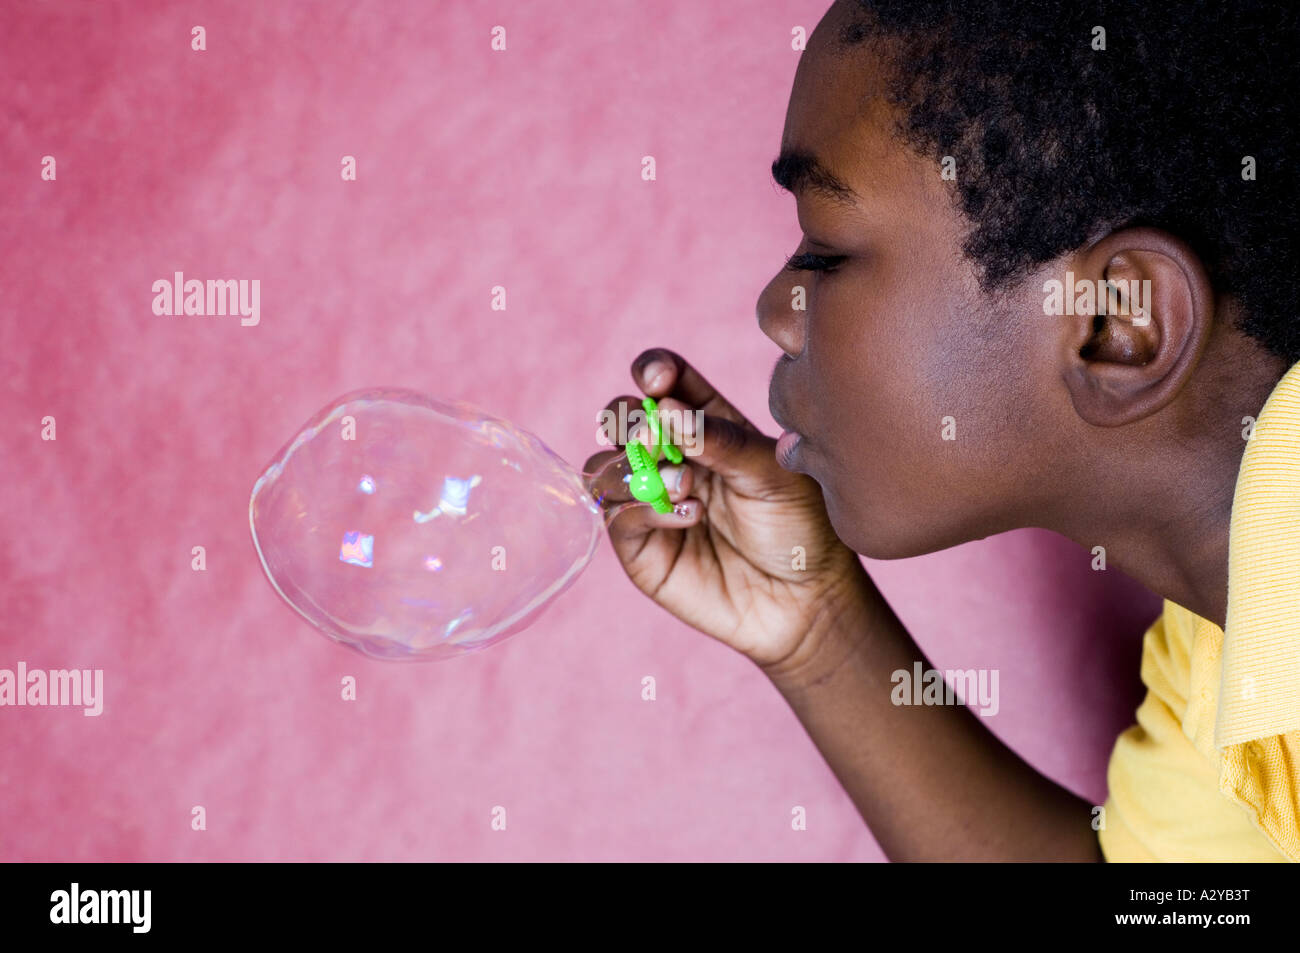 Boy blowing a bubble Stock Photo